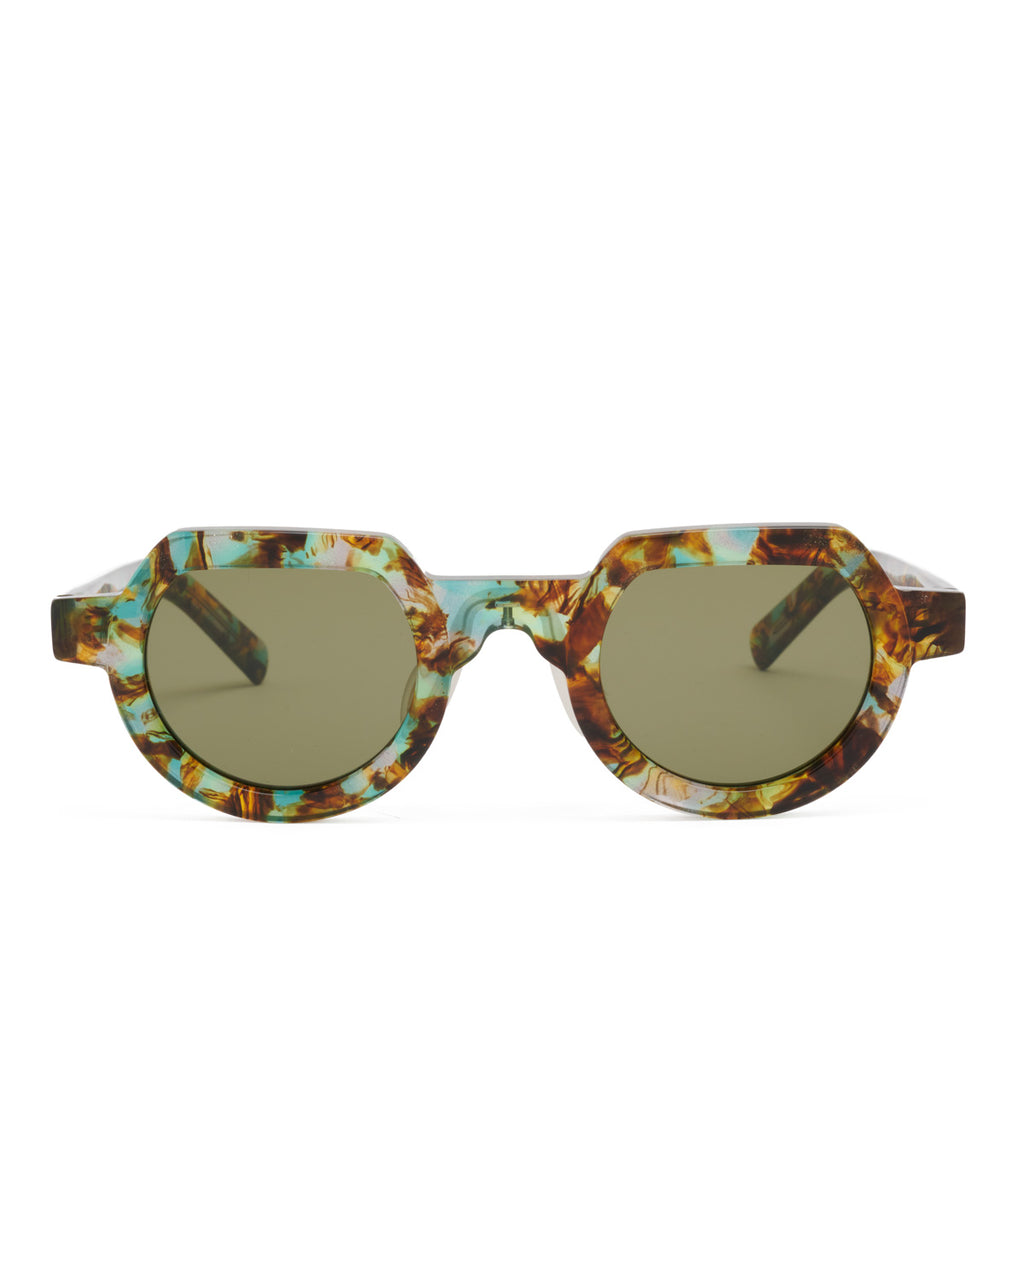 Tani Post Modern Primitive Eye Protection Sunglasses - Forrest/Green